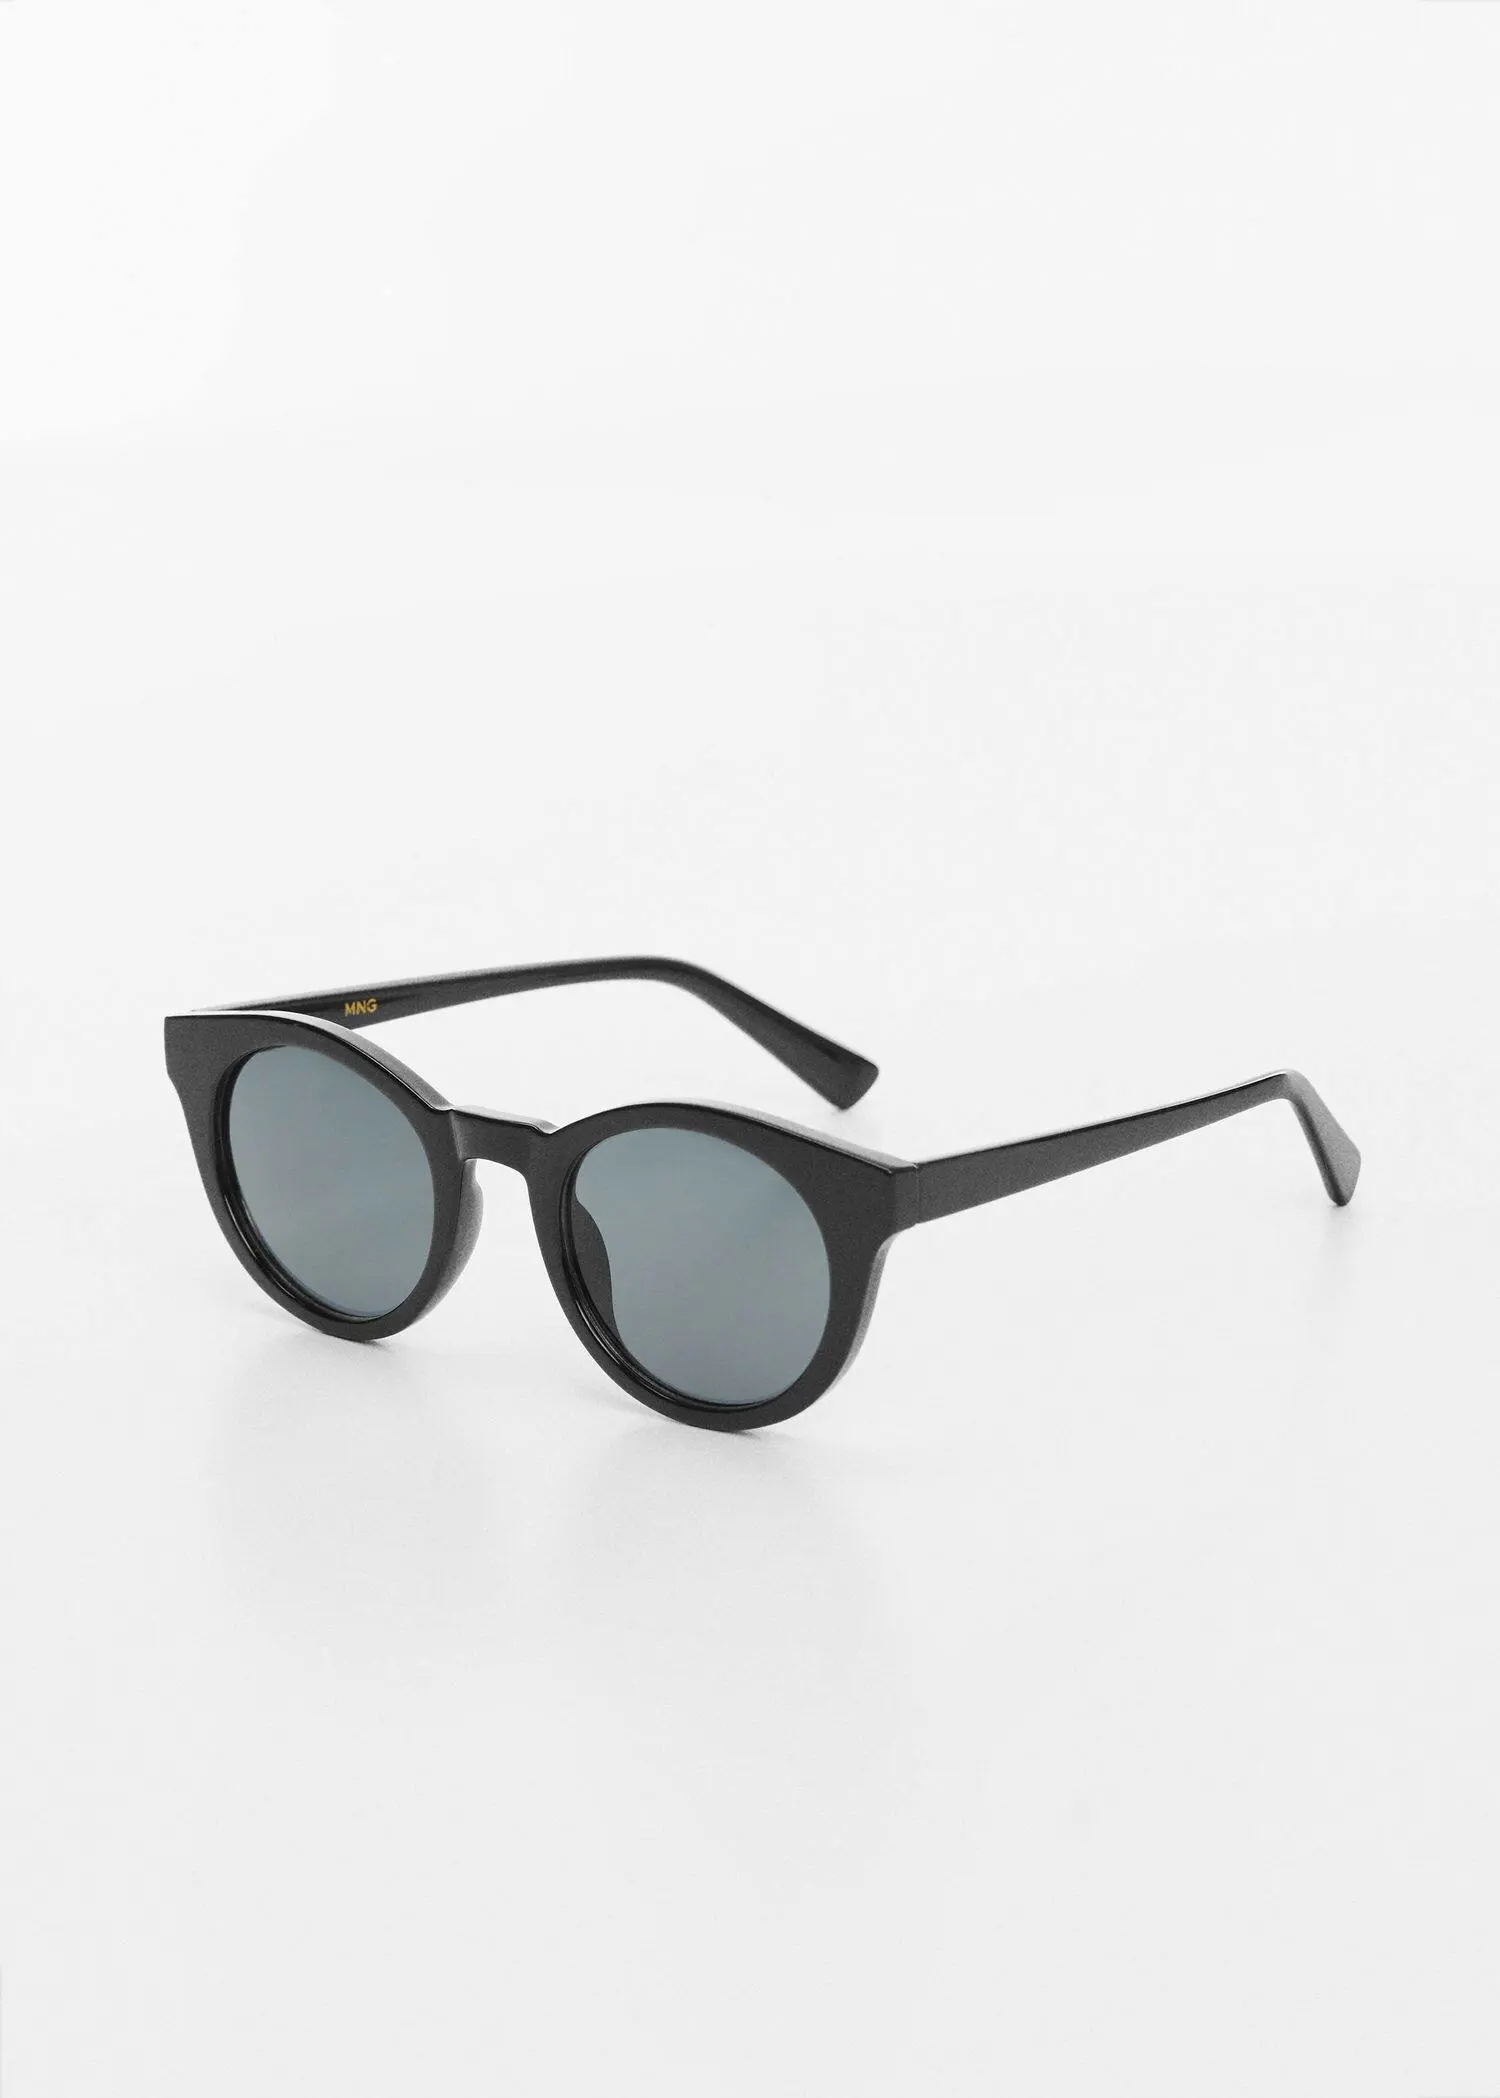 Mango Retro style sunglasses. 2